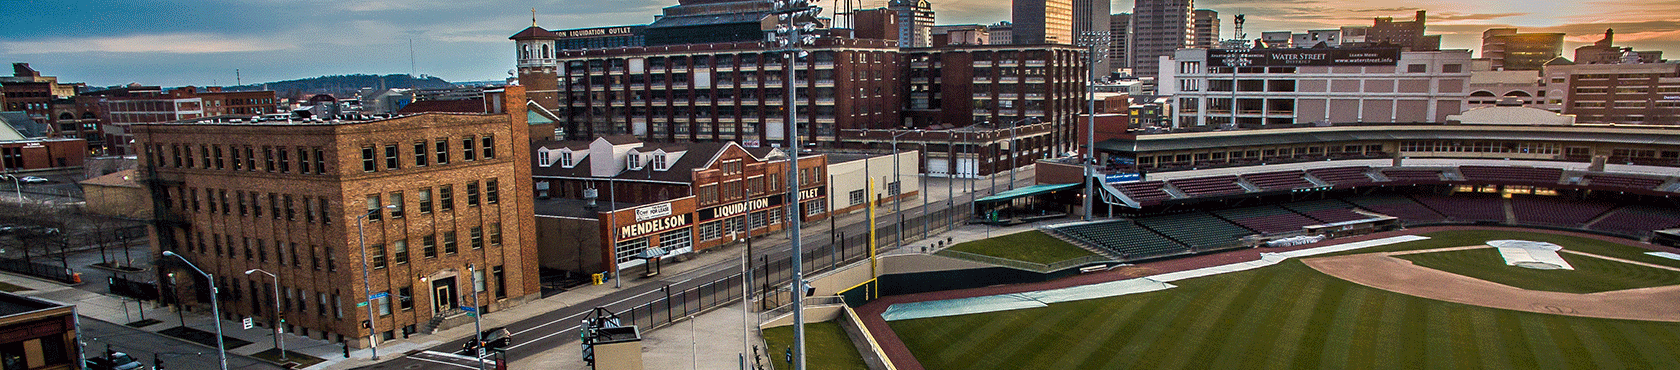 Dayton Dragon baseball field and street